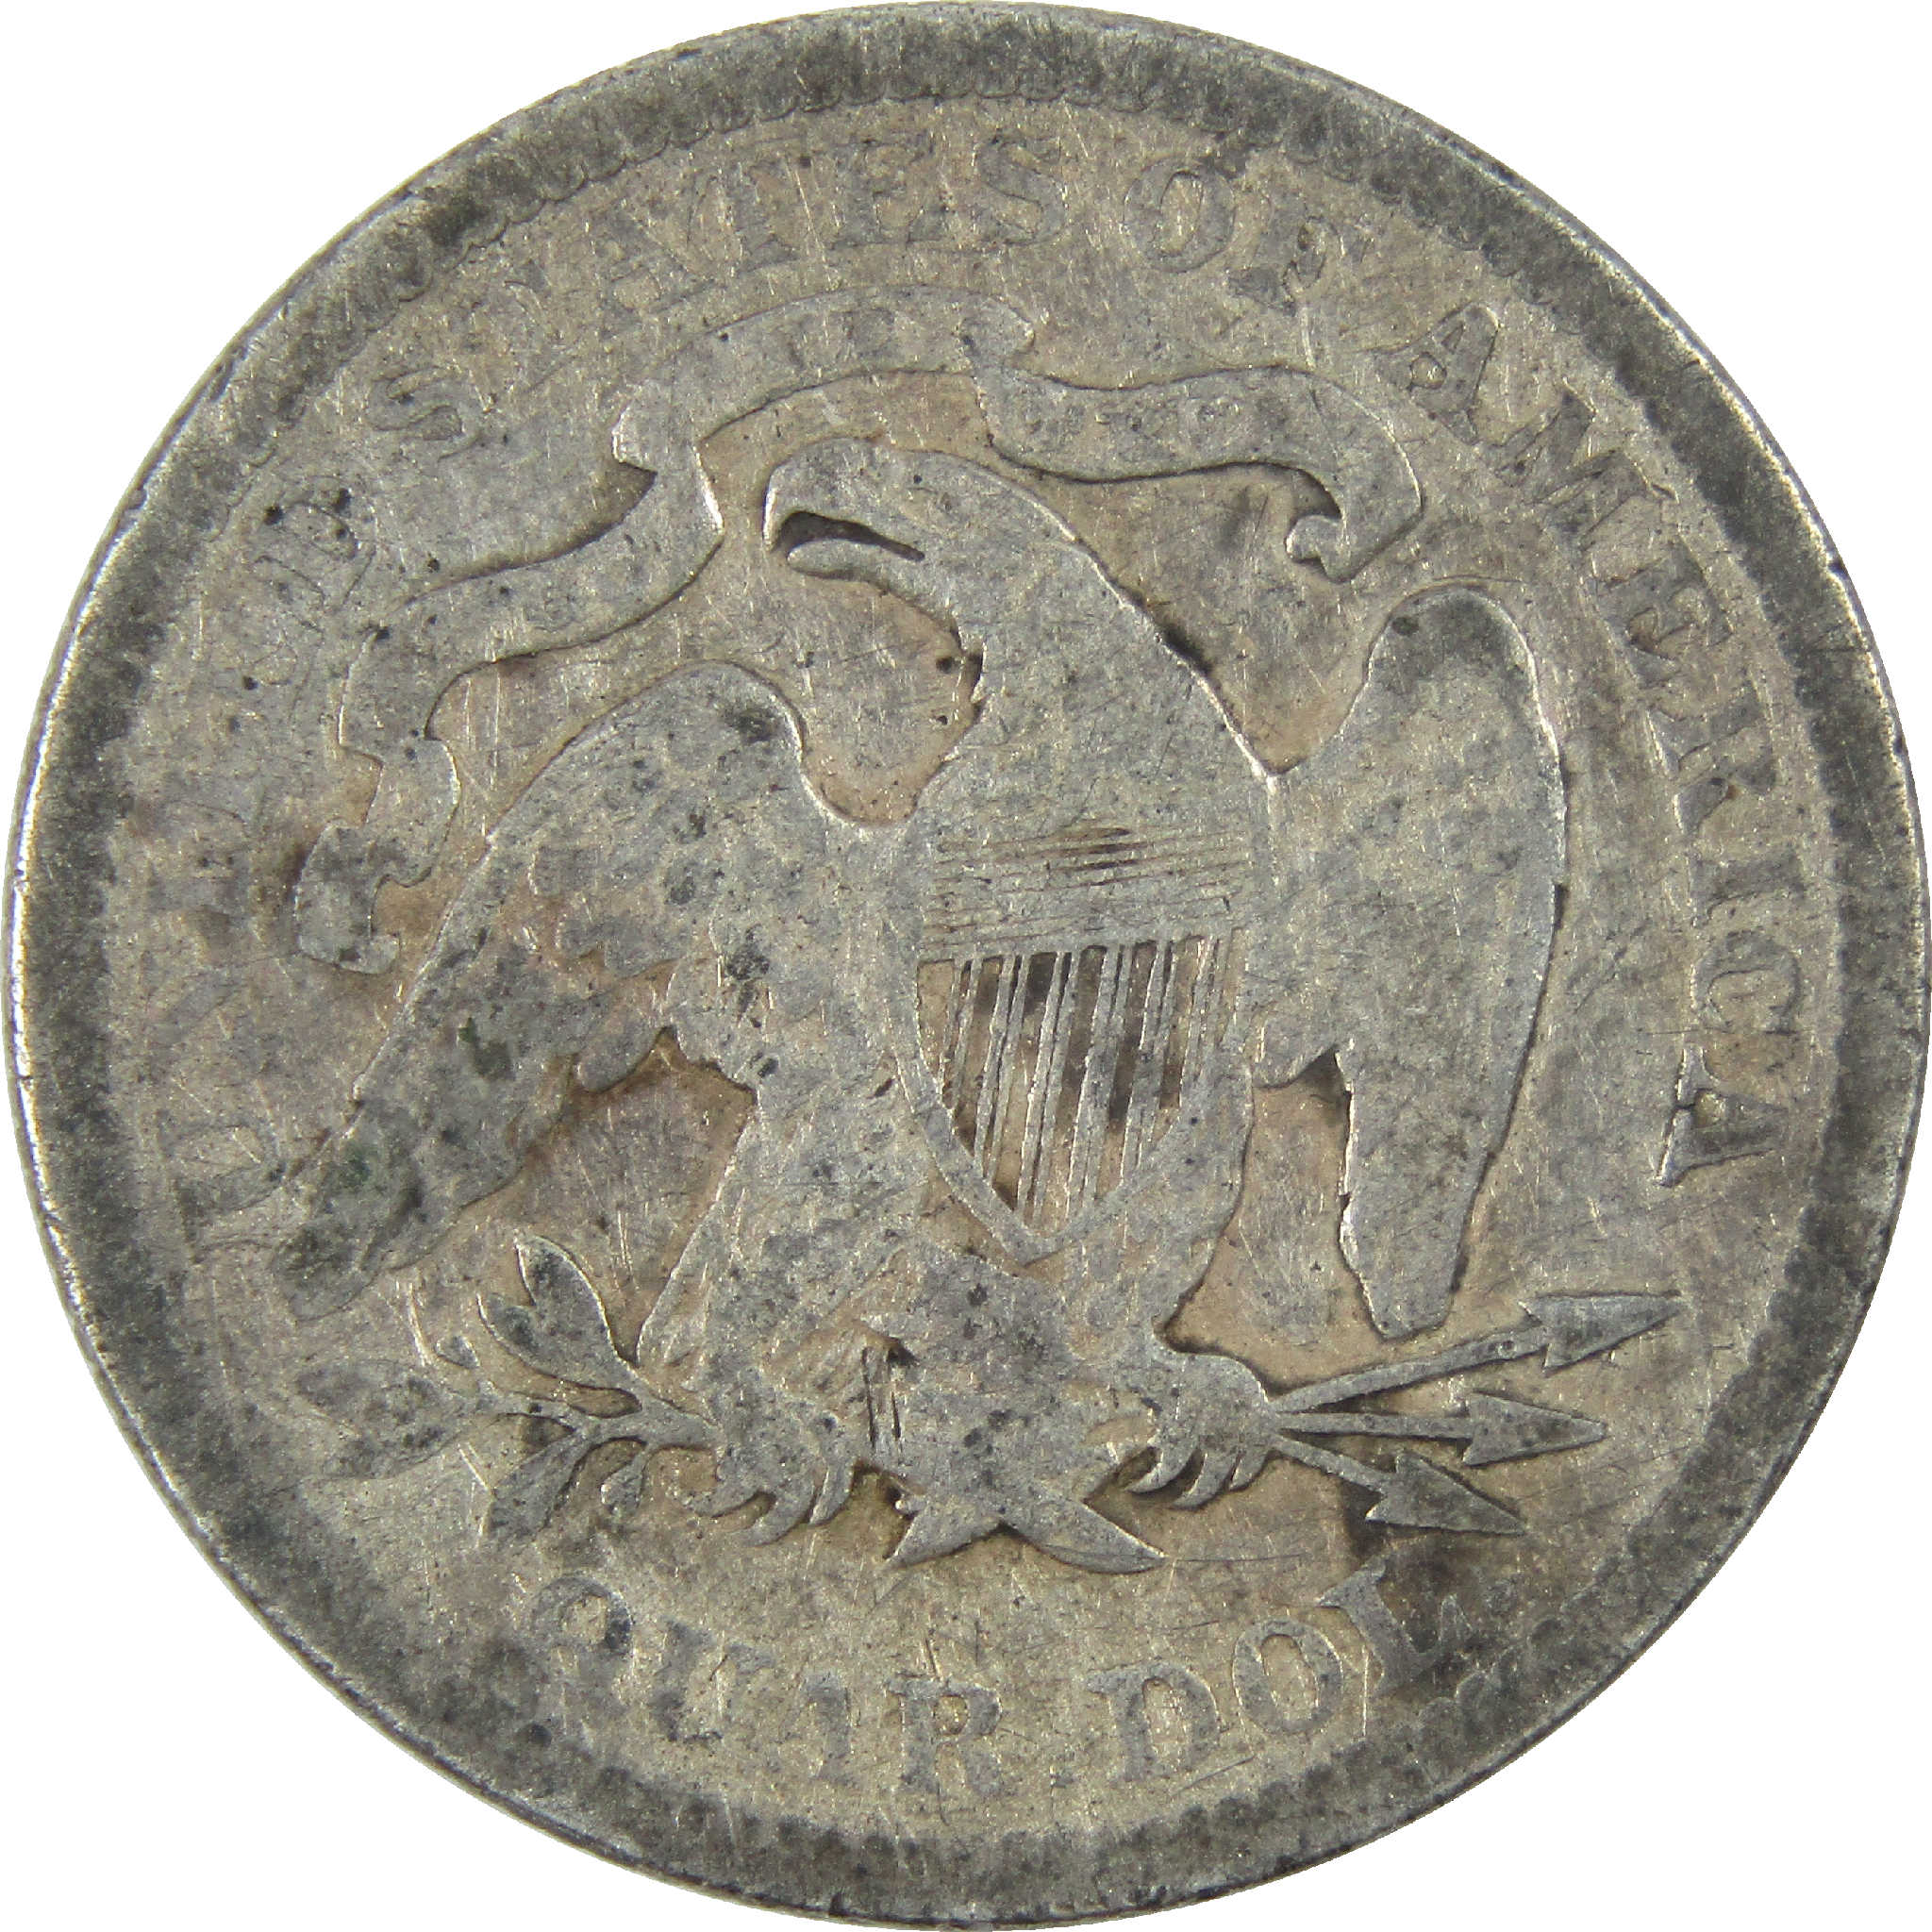 1877 Seated Liberty Quarter VG Very Good Details Silver 25c SKU:I12288